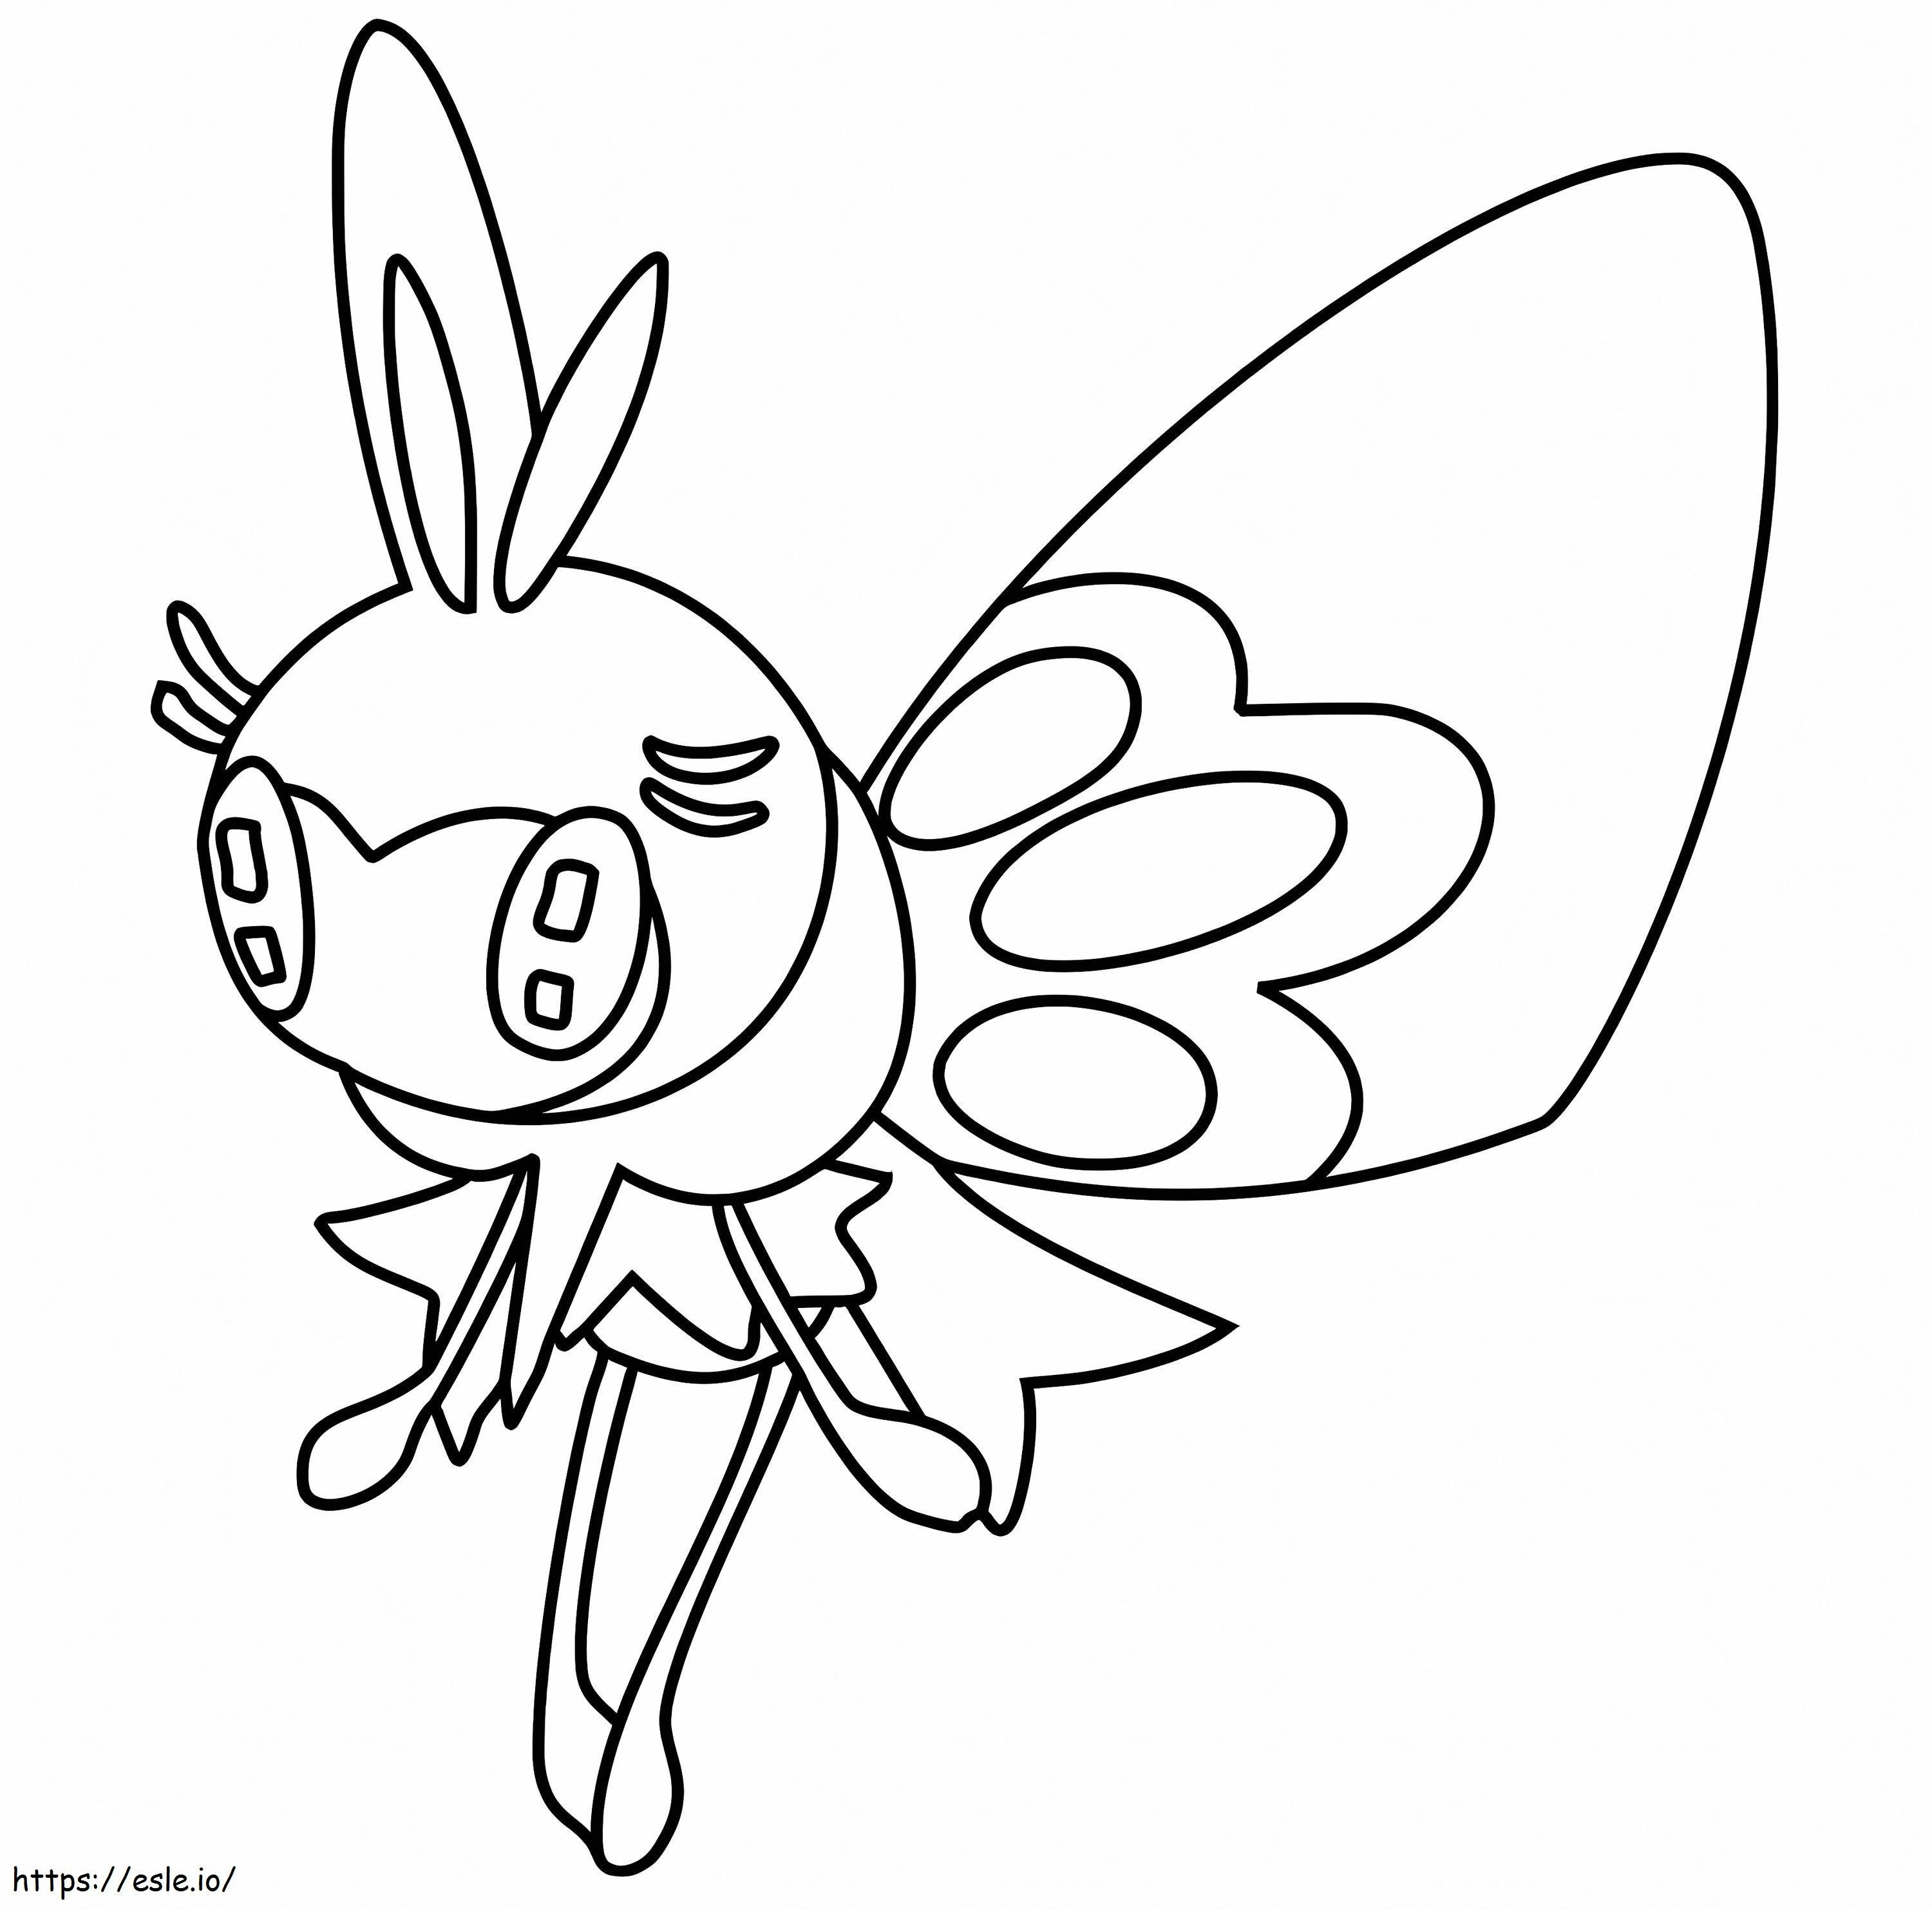 Ribombee-Pokémon ausmalbilder